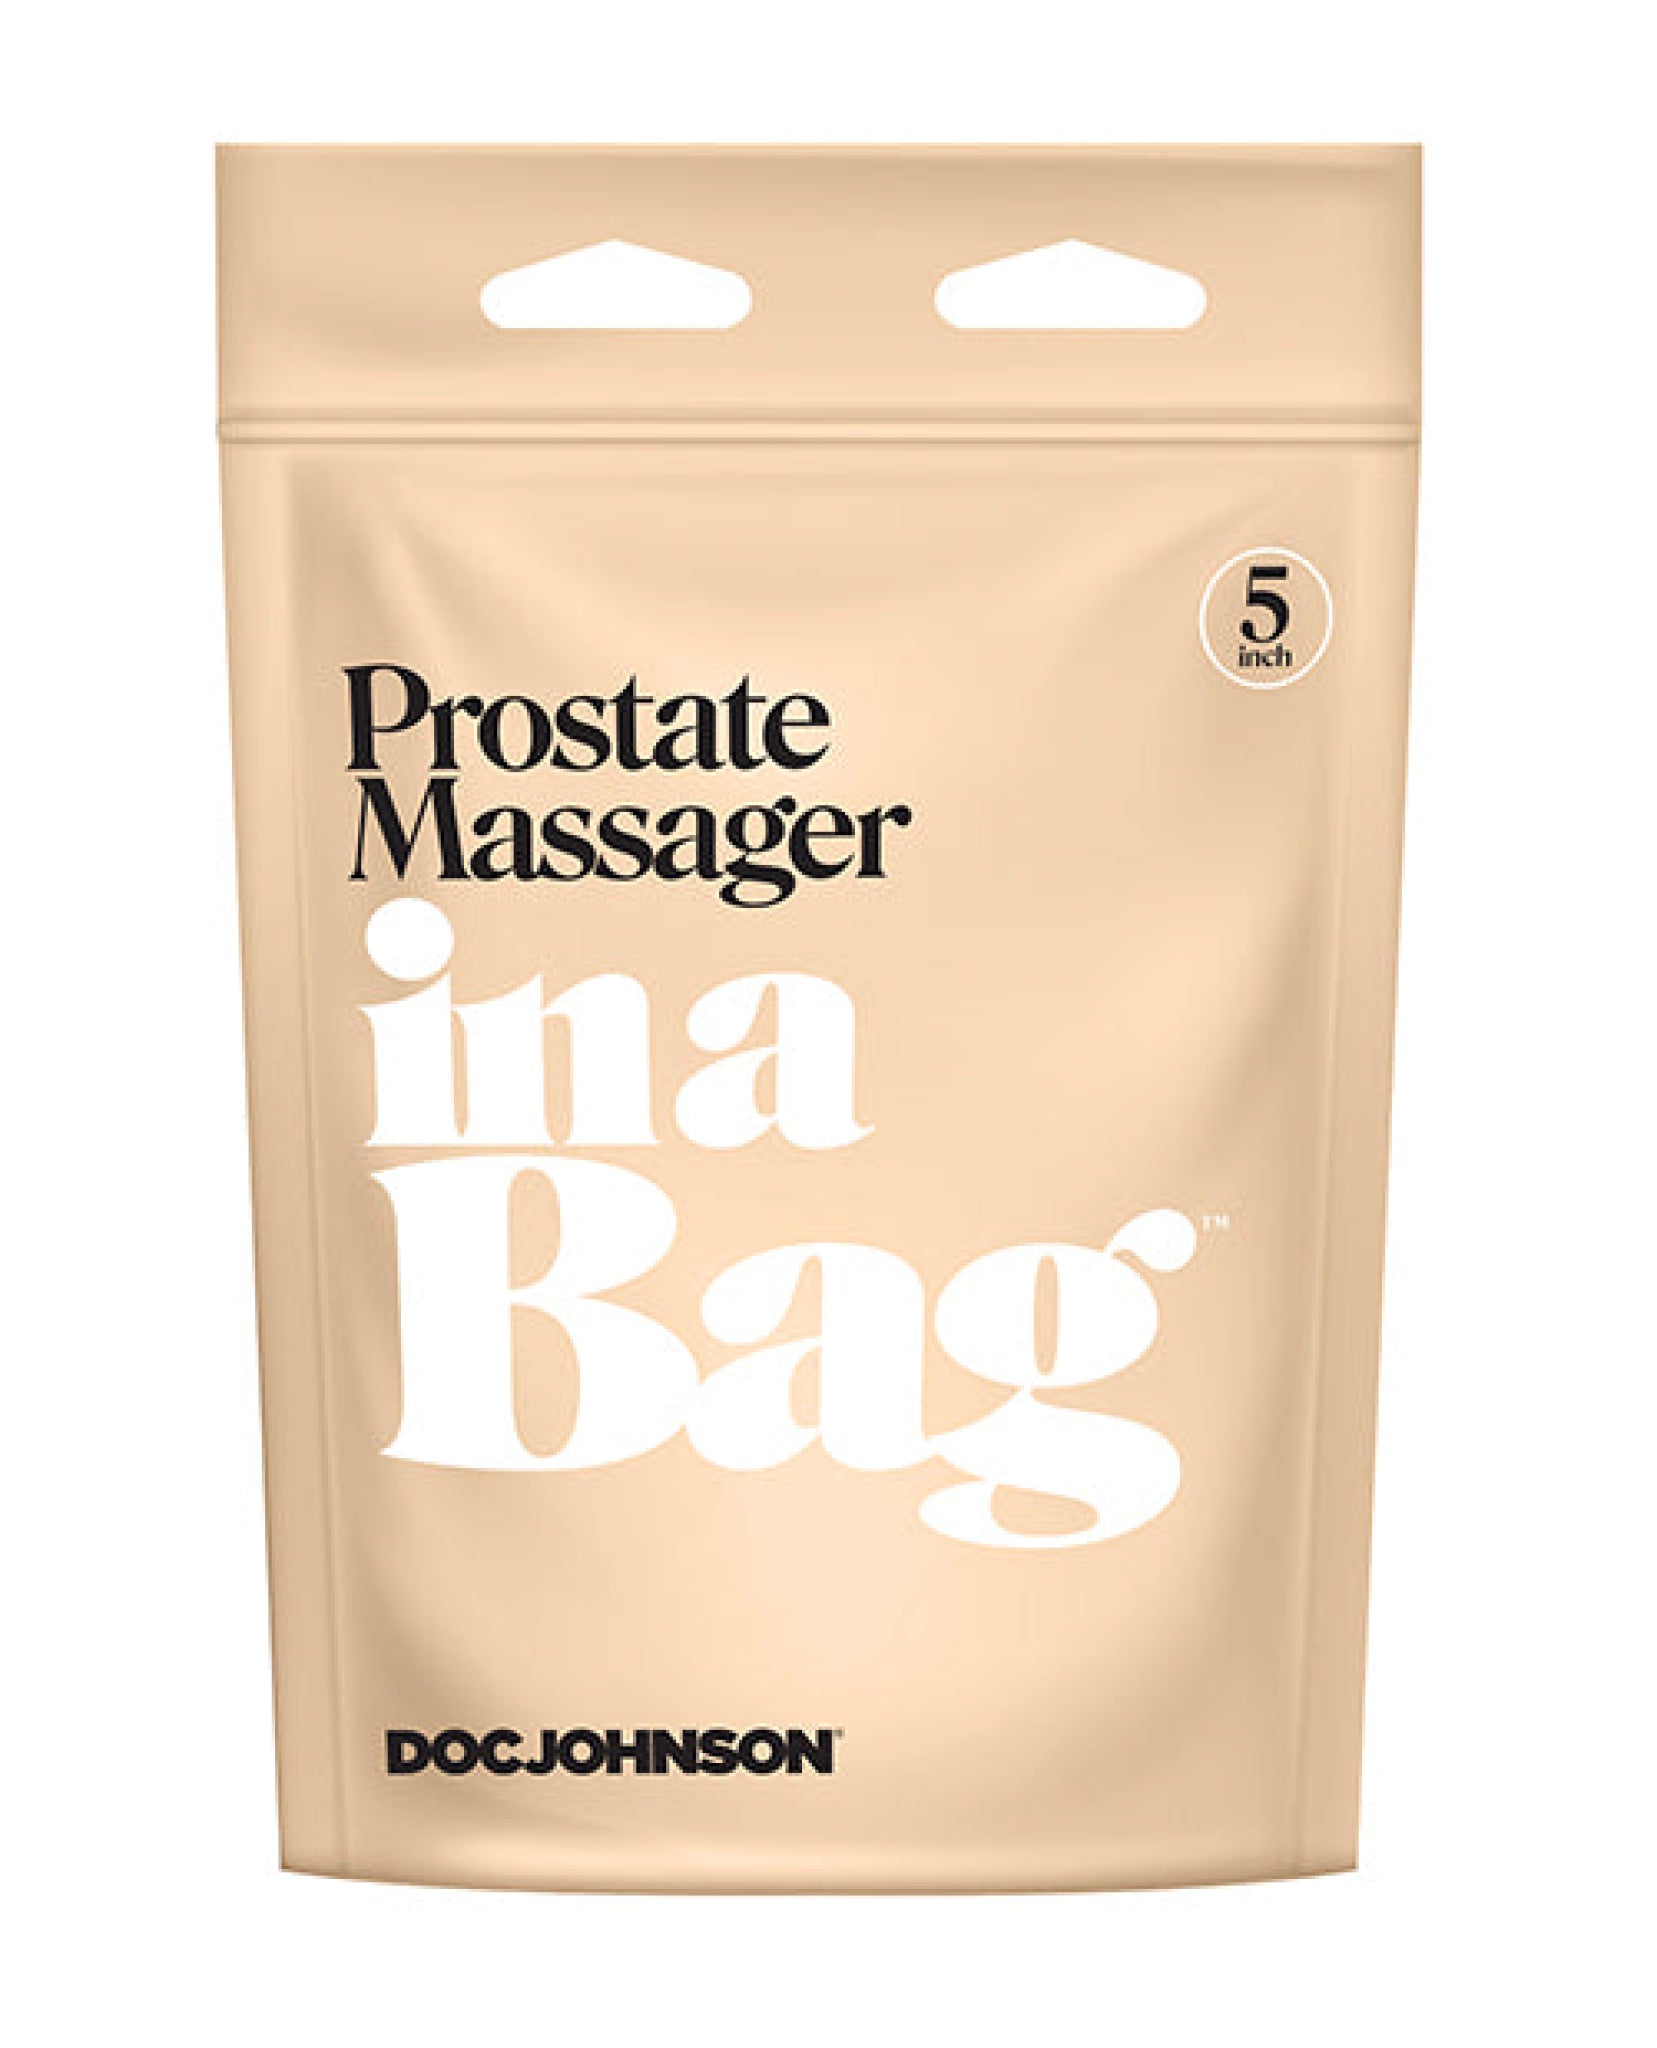 In A Bag Prostate Massager - Black Doc Johnson